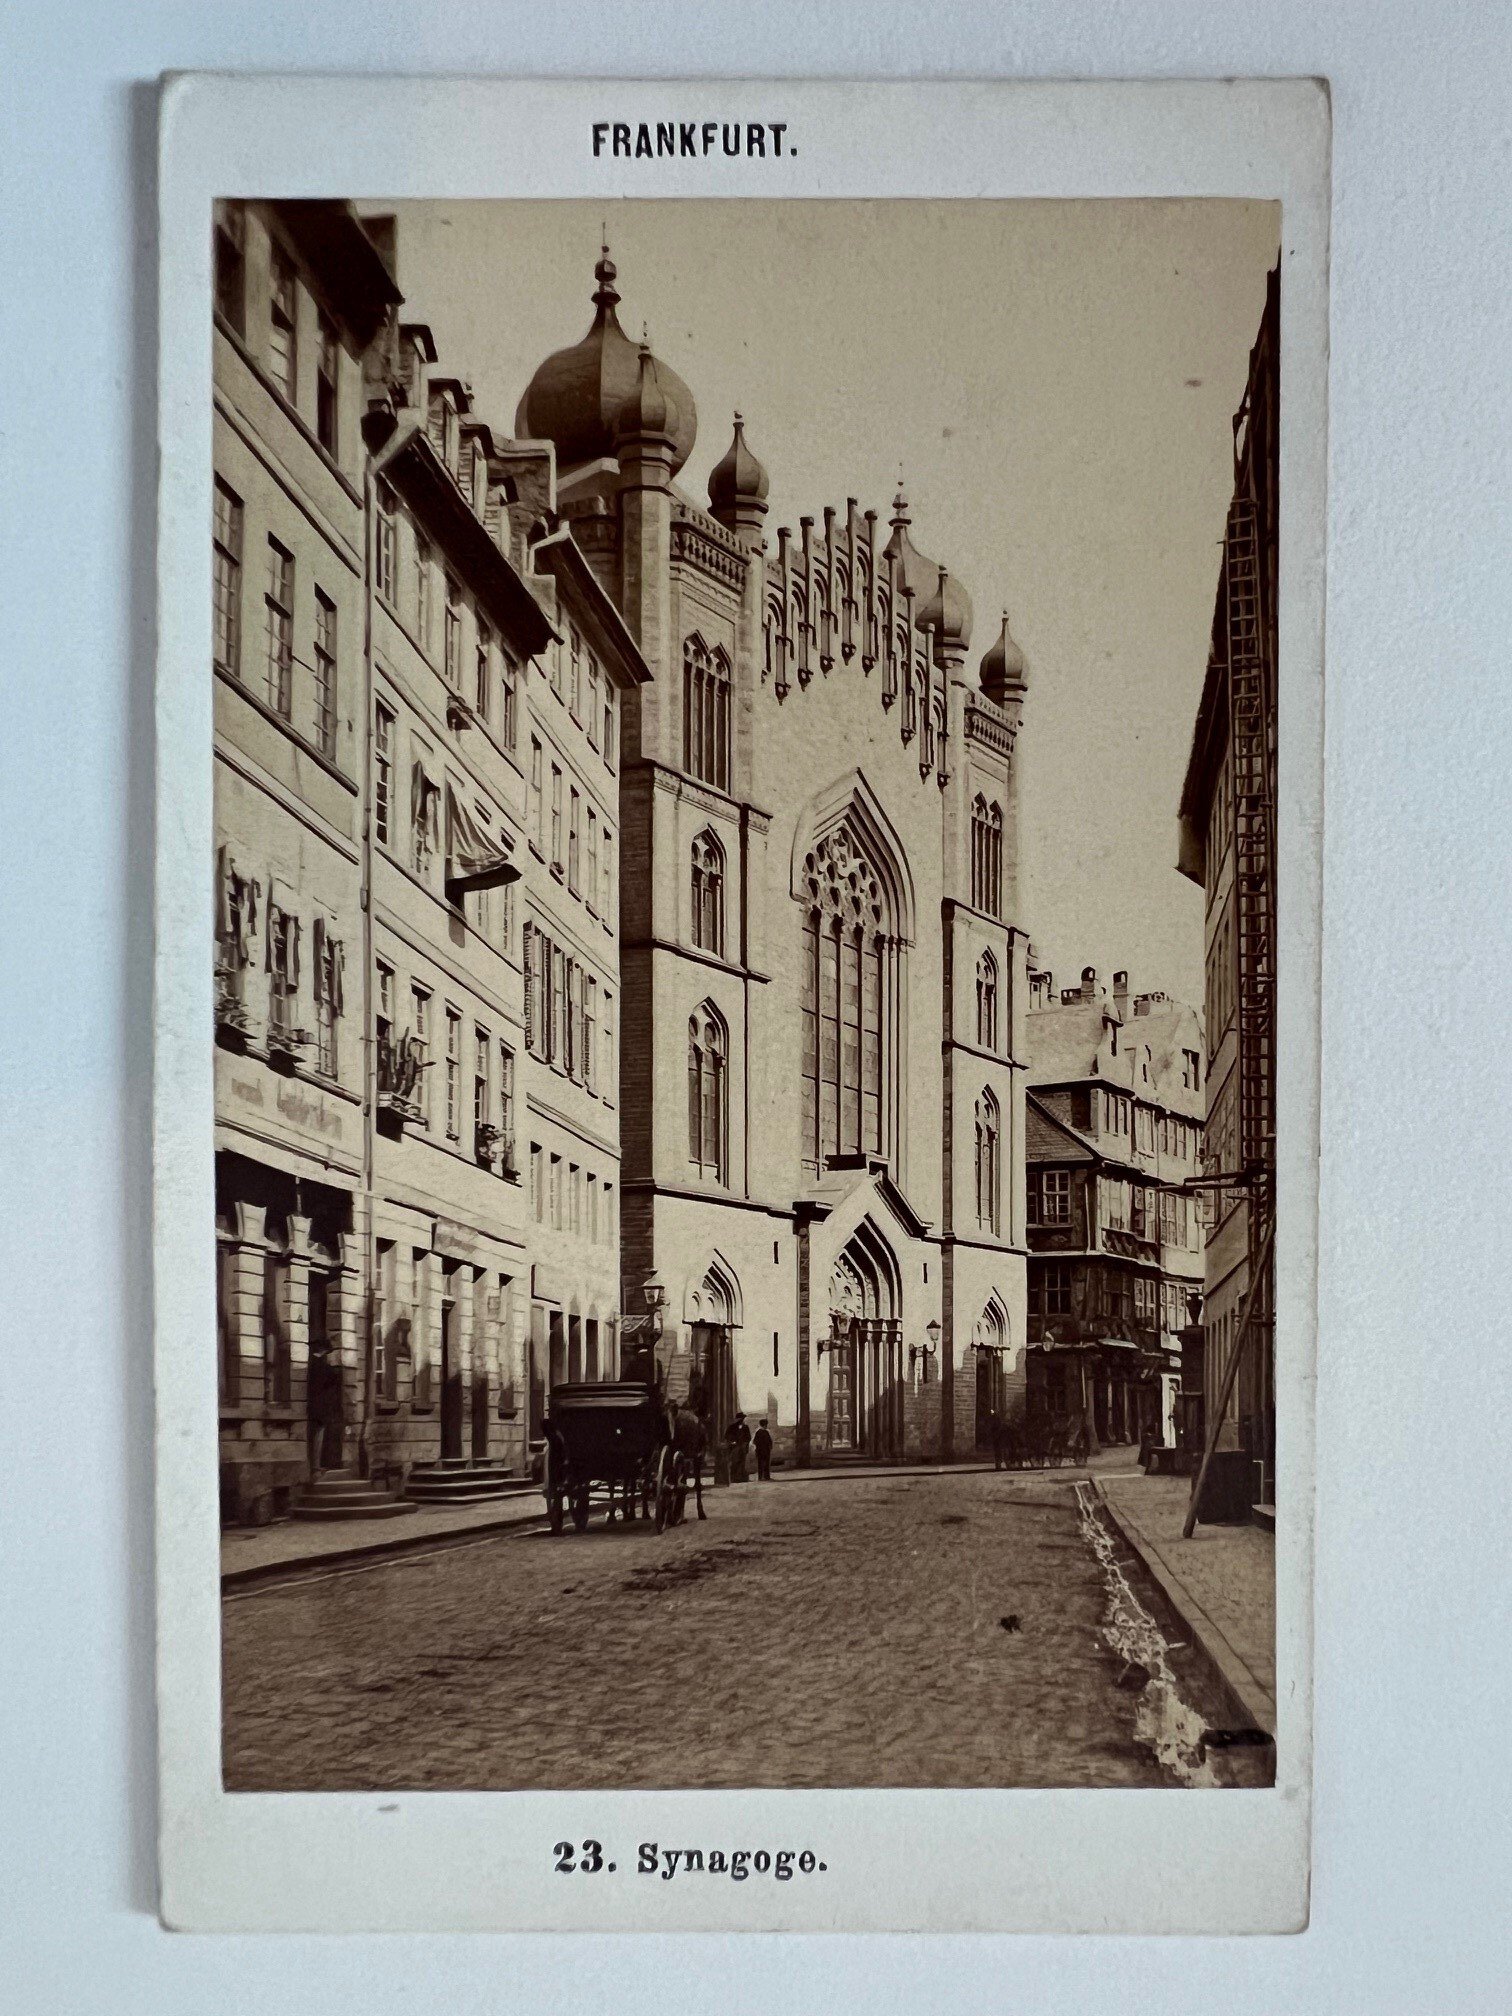 CdV, Frantisek Fridrich, Frankfurt, Nr. 23, Synagoge, ca. 1875. (Taunus-Rhein-Main - Regionalgeschichtliche Sammlung Dr. Stefan Naas CC BY-NC-SA)